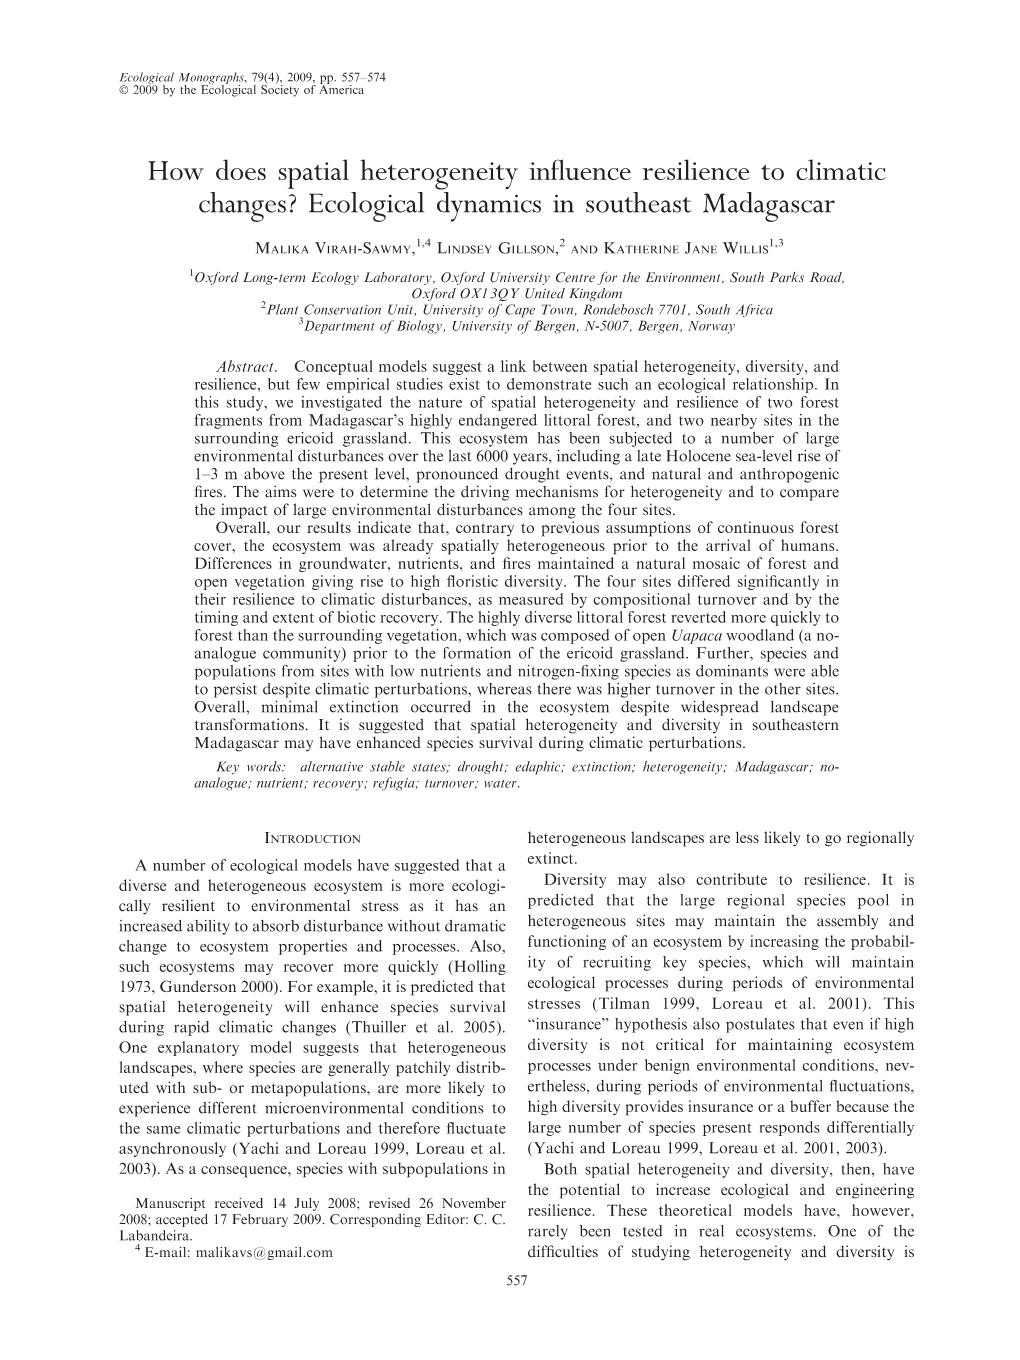 Virah-Sawmy Et Al. 2009. Madagascar CC & Spatial Heterogeneity.Pdf